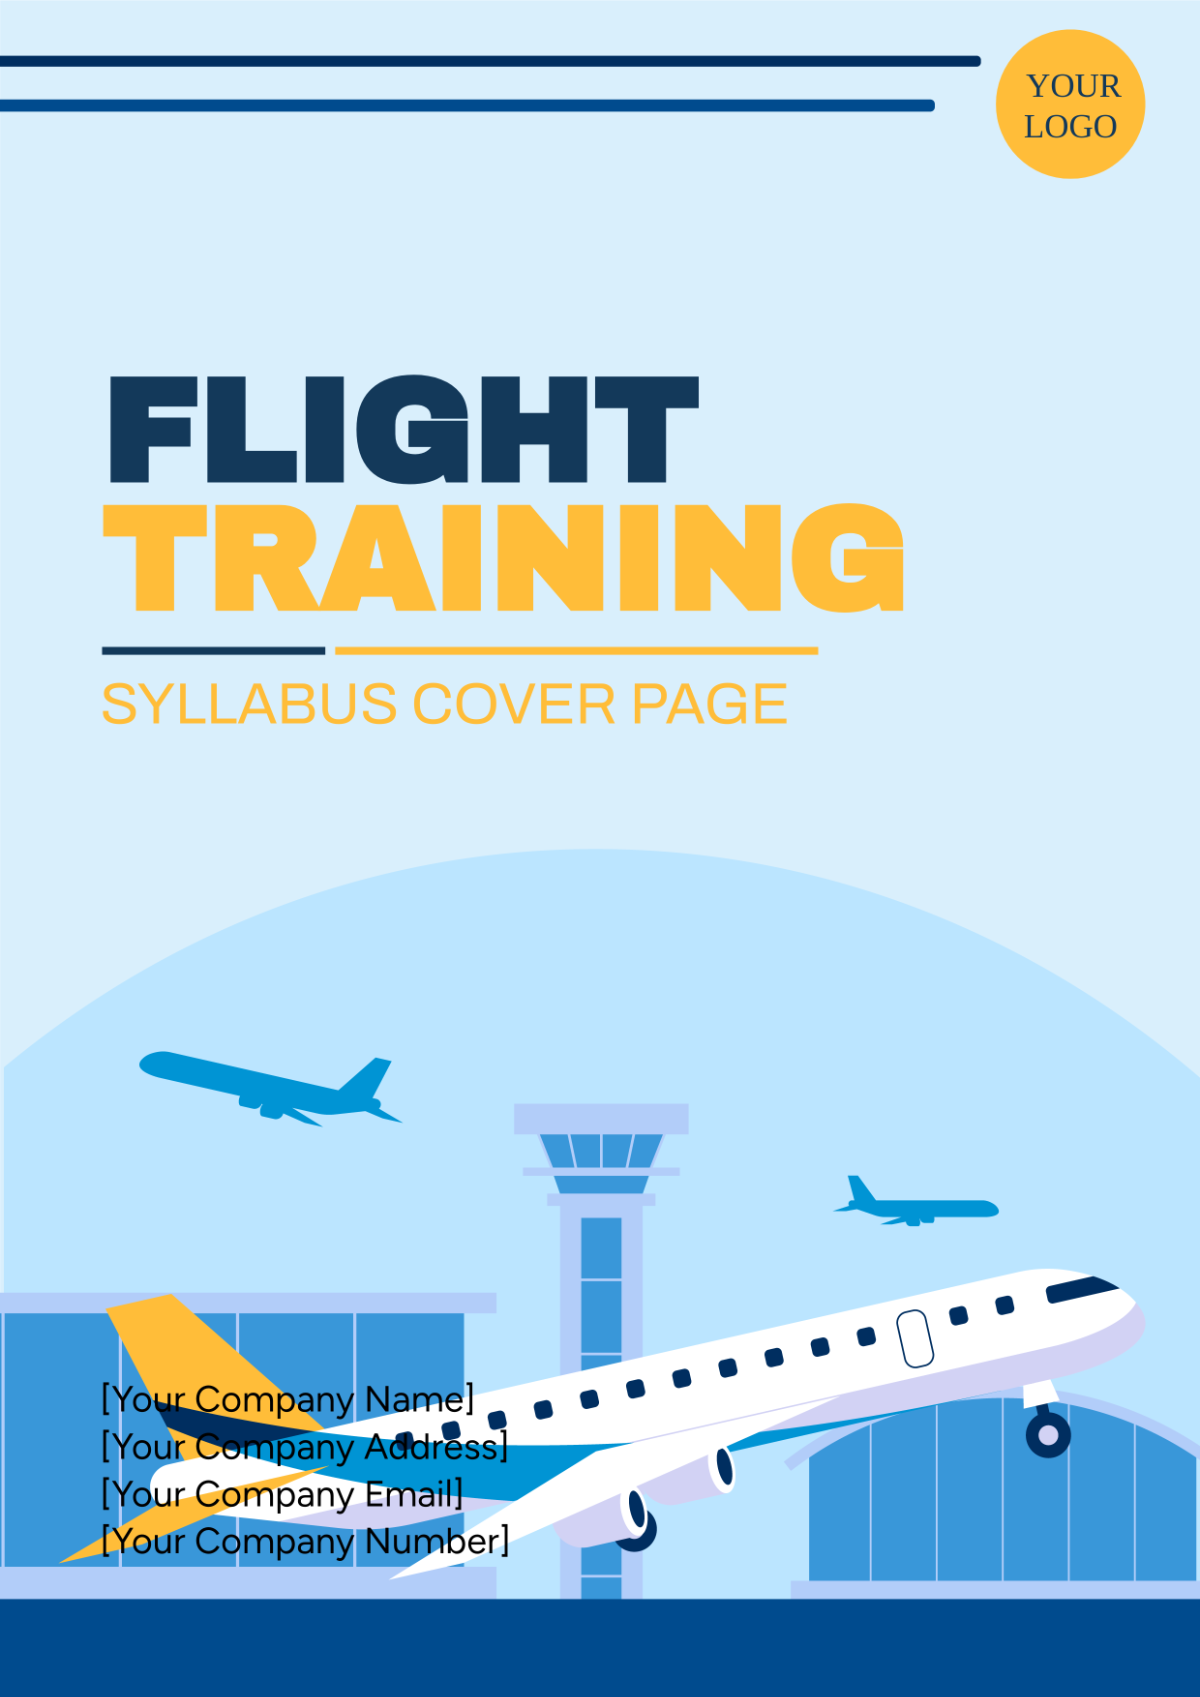 Flight Training Syllabus Cover Page